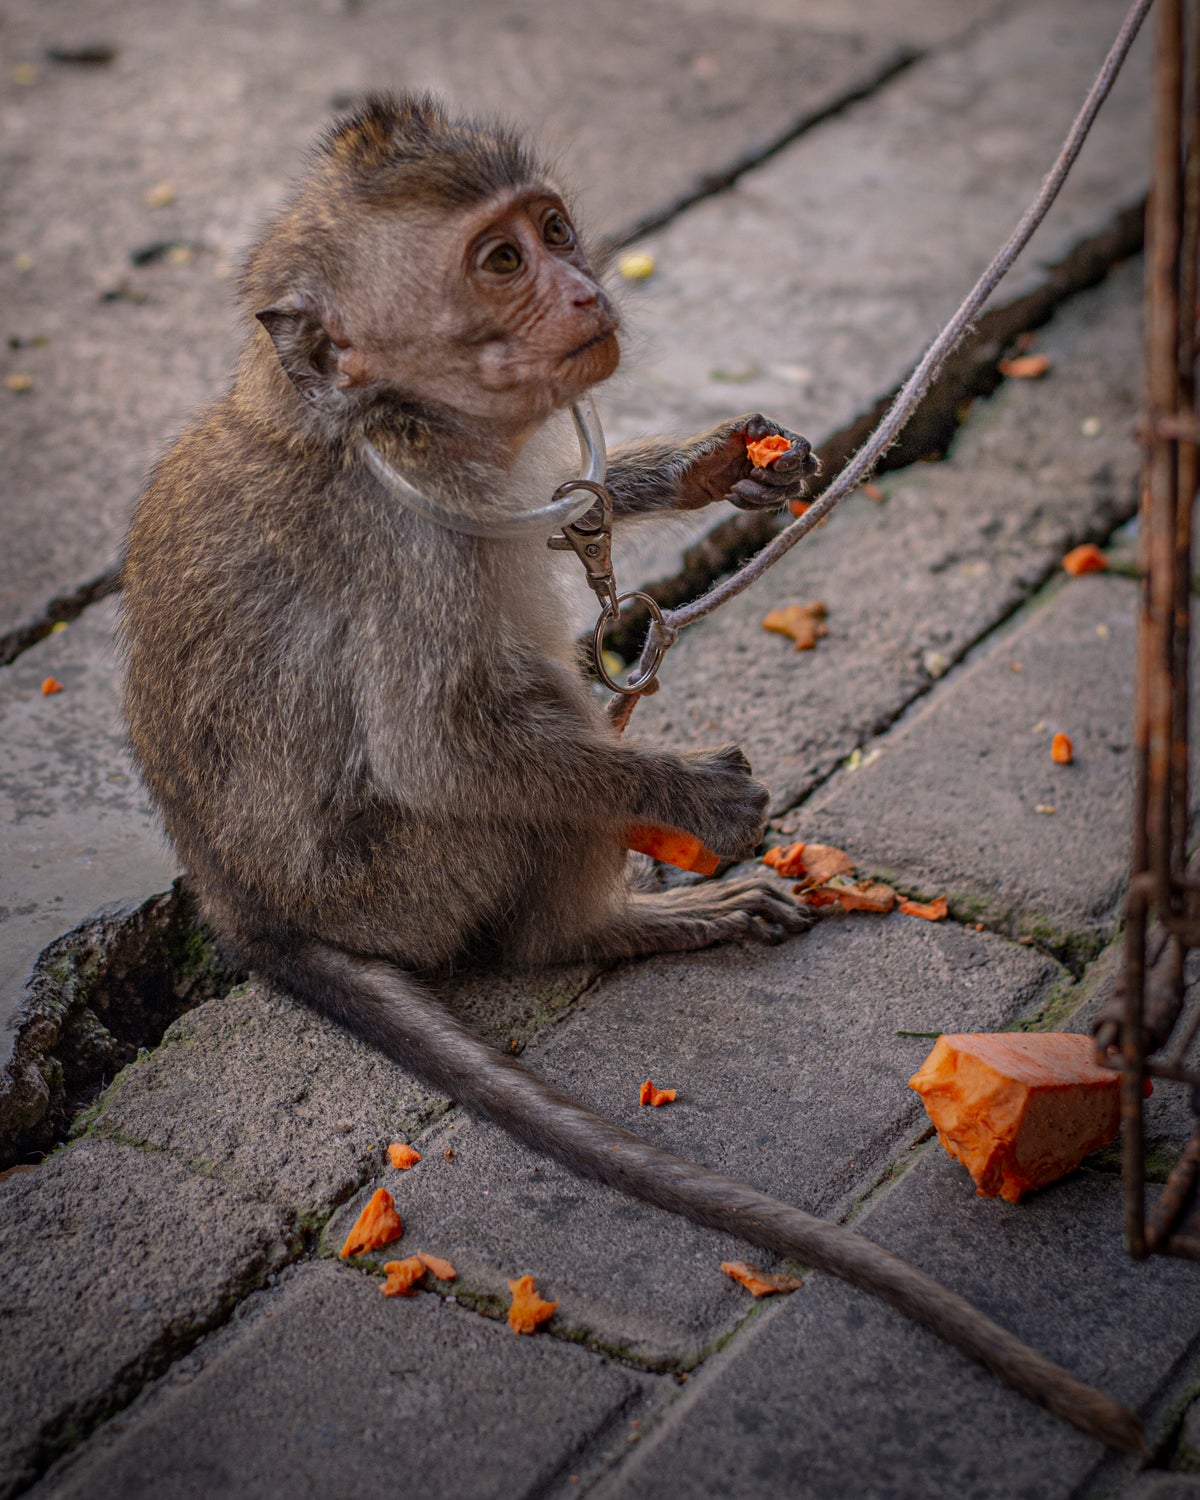 Monkey torture videos urge inclusion of animals in online safety bill